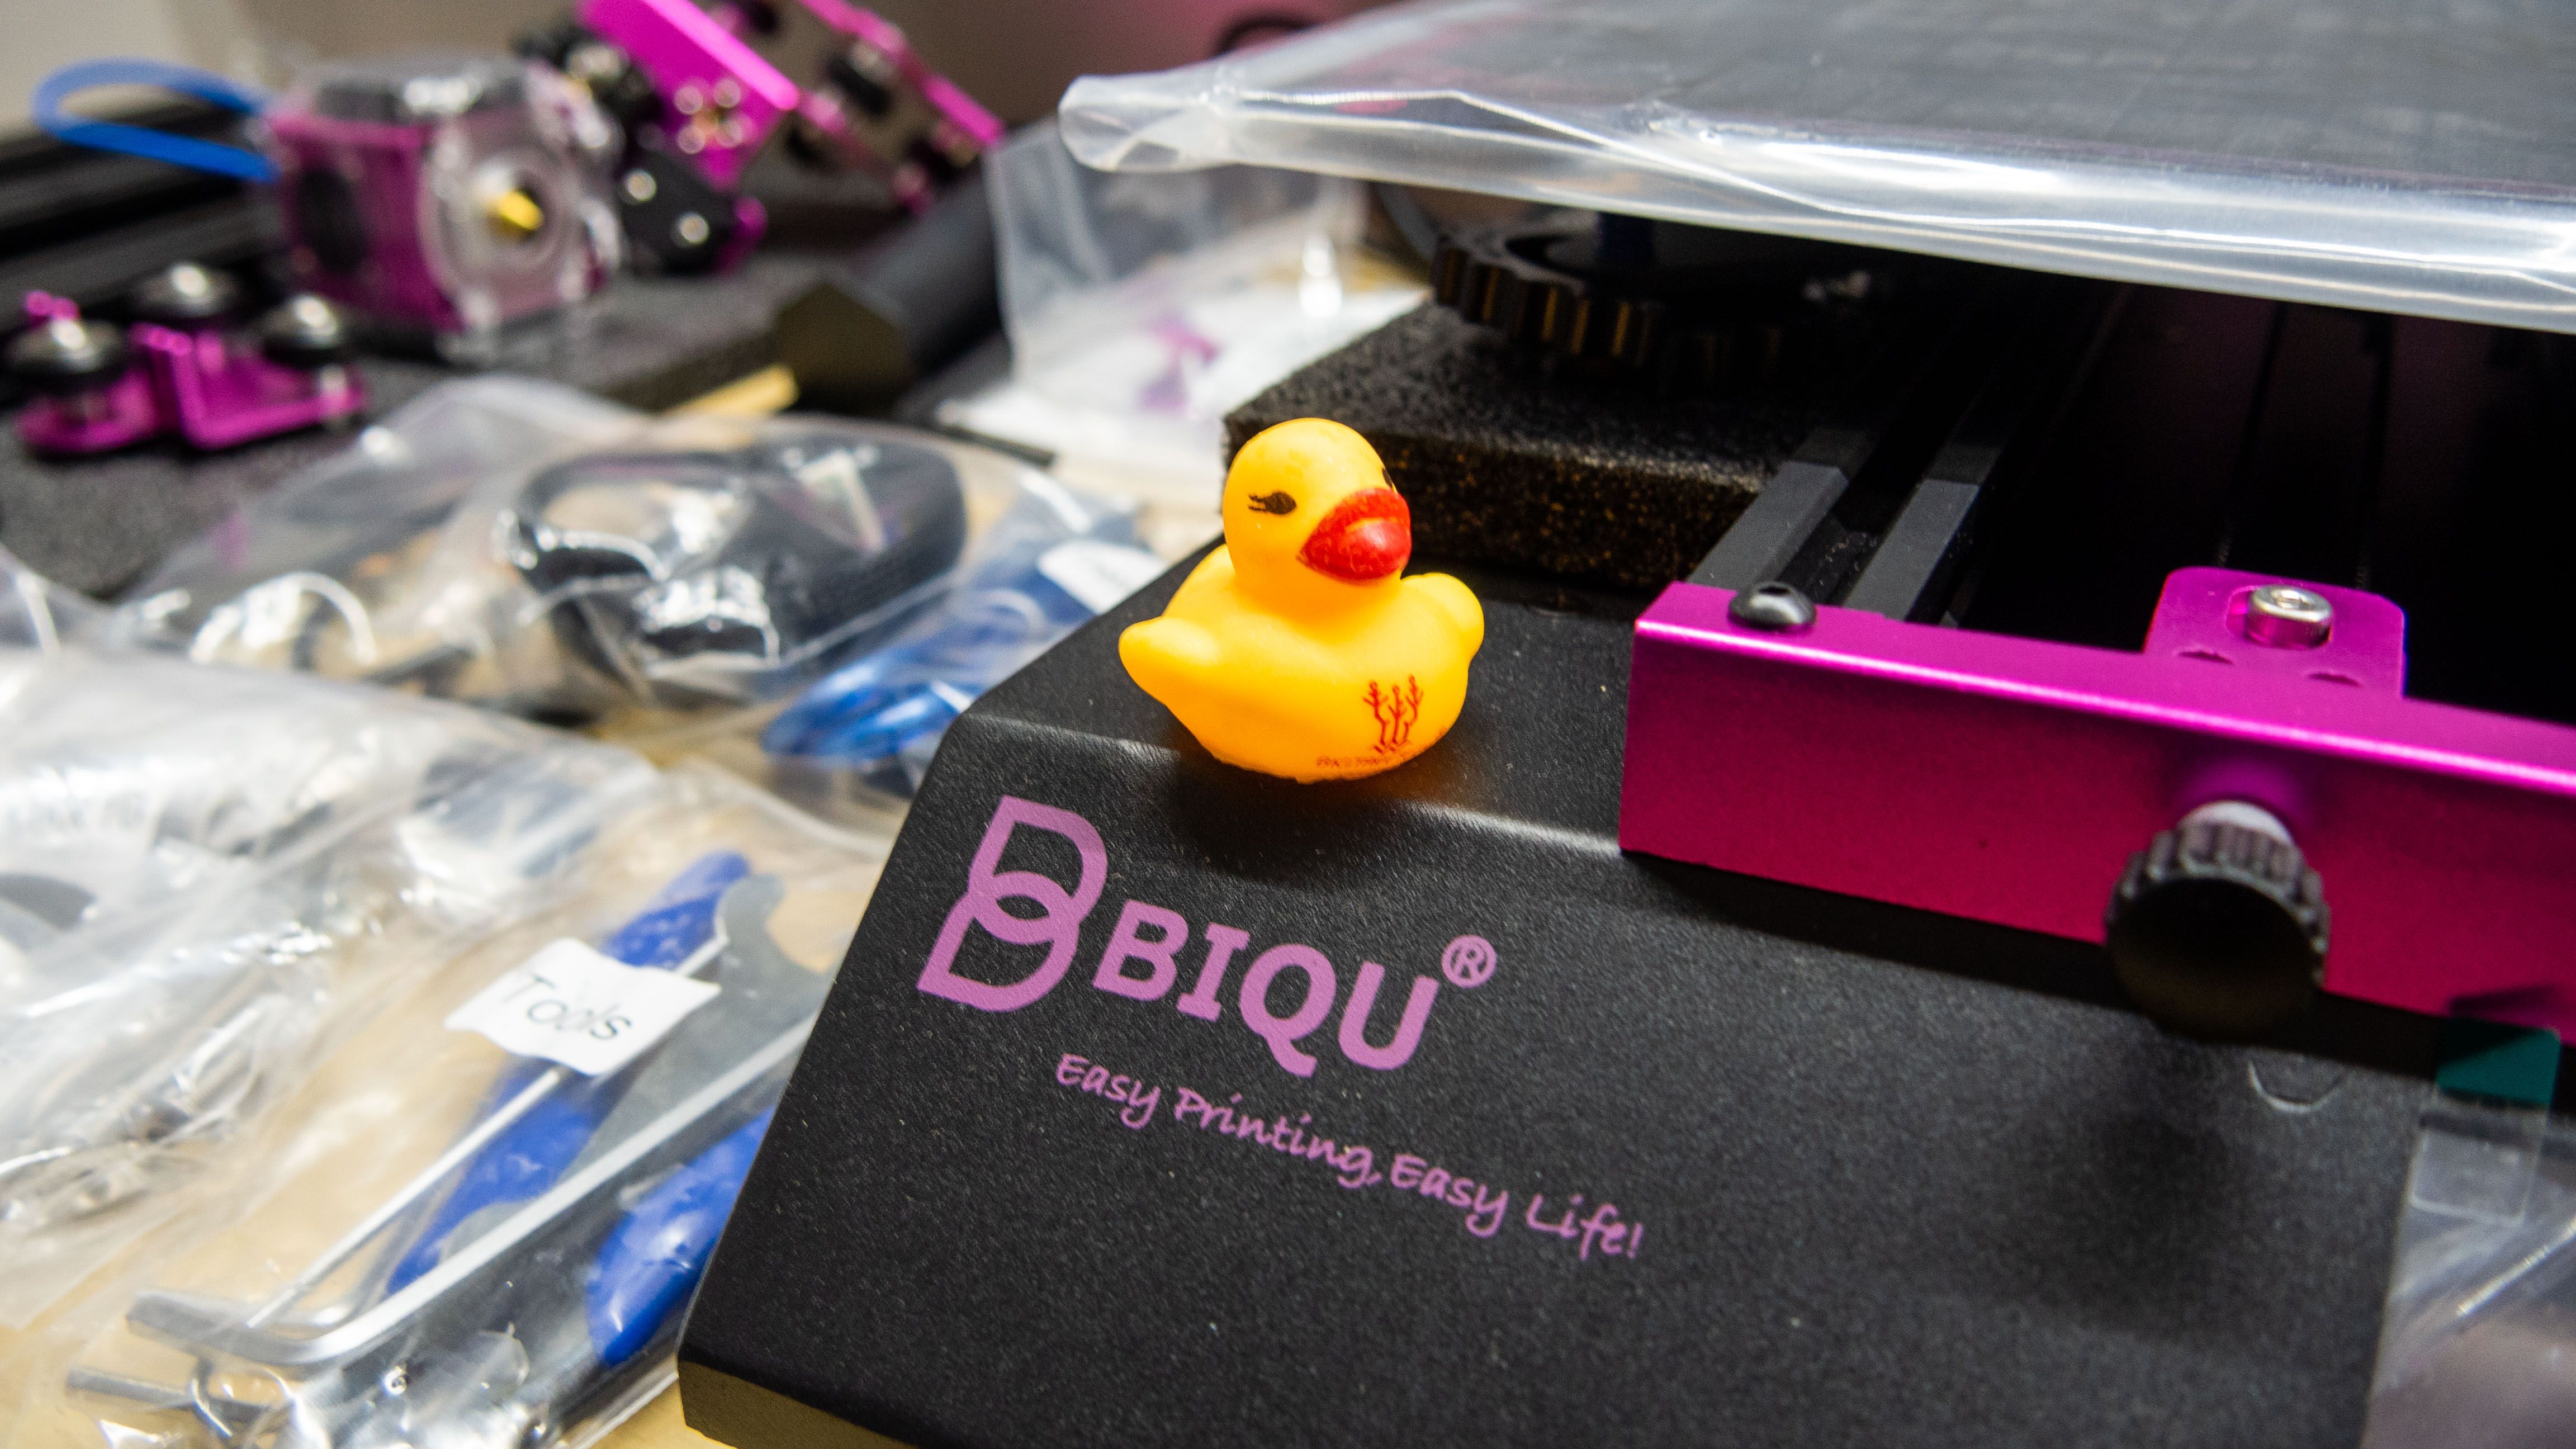 biqu b1- logo and duck